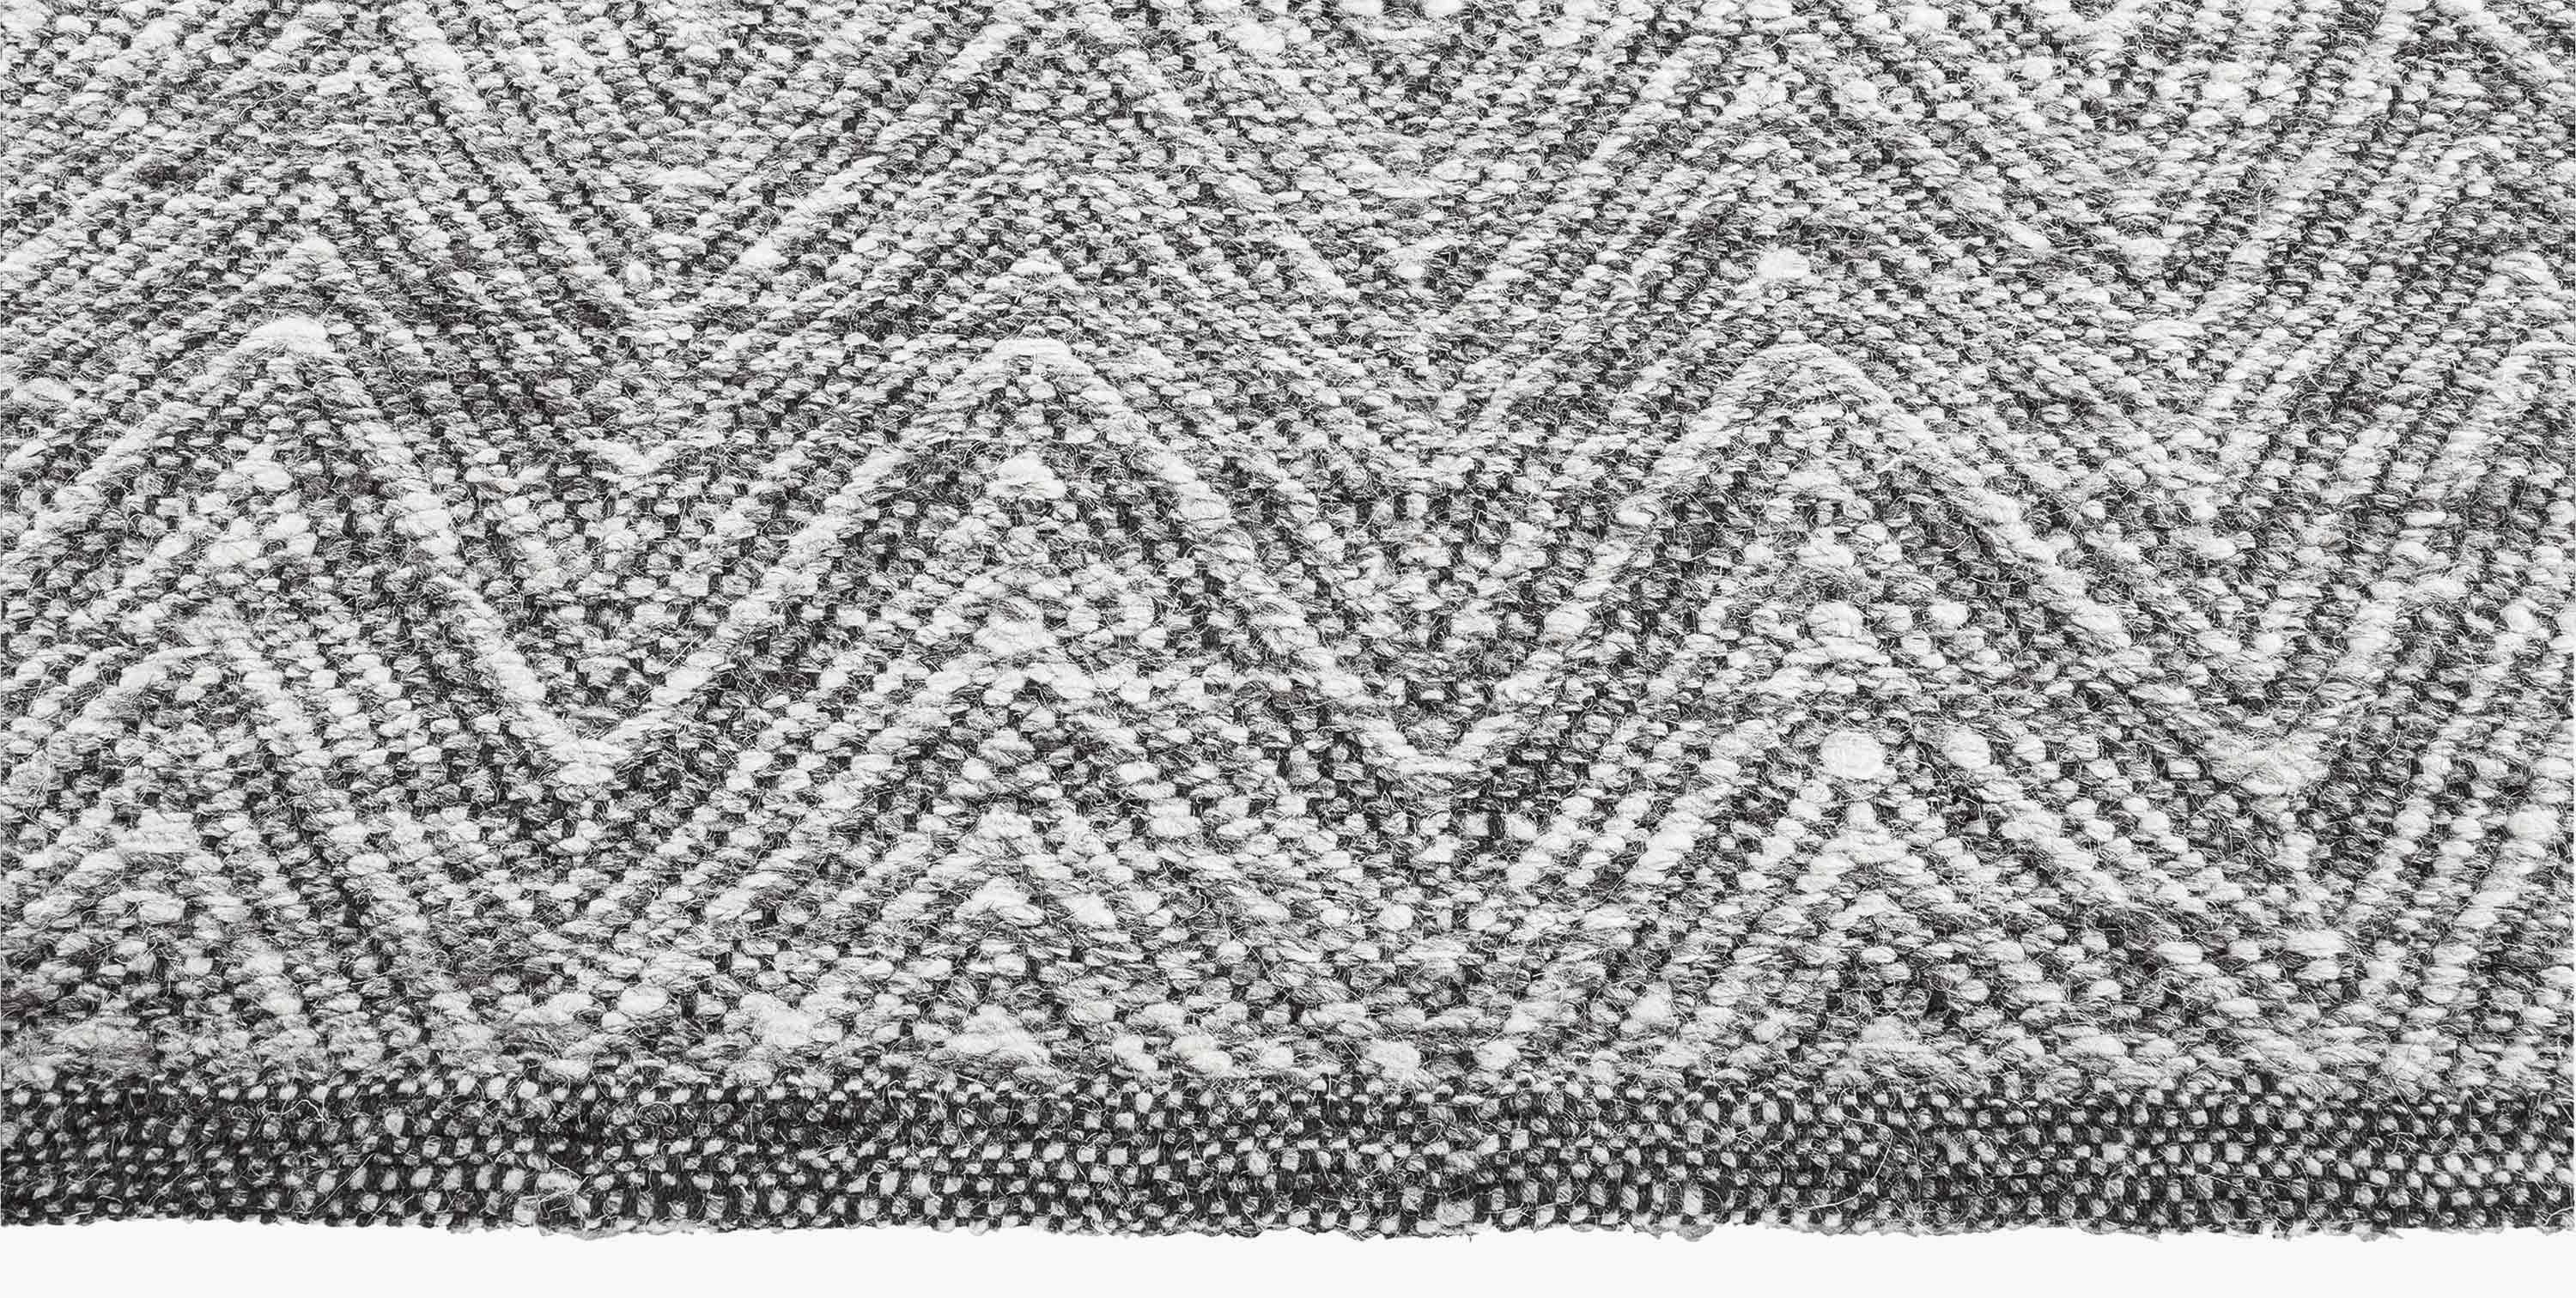 For Sale: Black (Charcoal) Ben Soleimani Ceyah Rug– Hand-woven Plush Textured Wool + Linen Charcoal 6'x9' 3